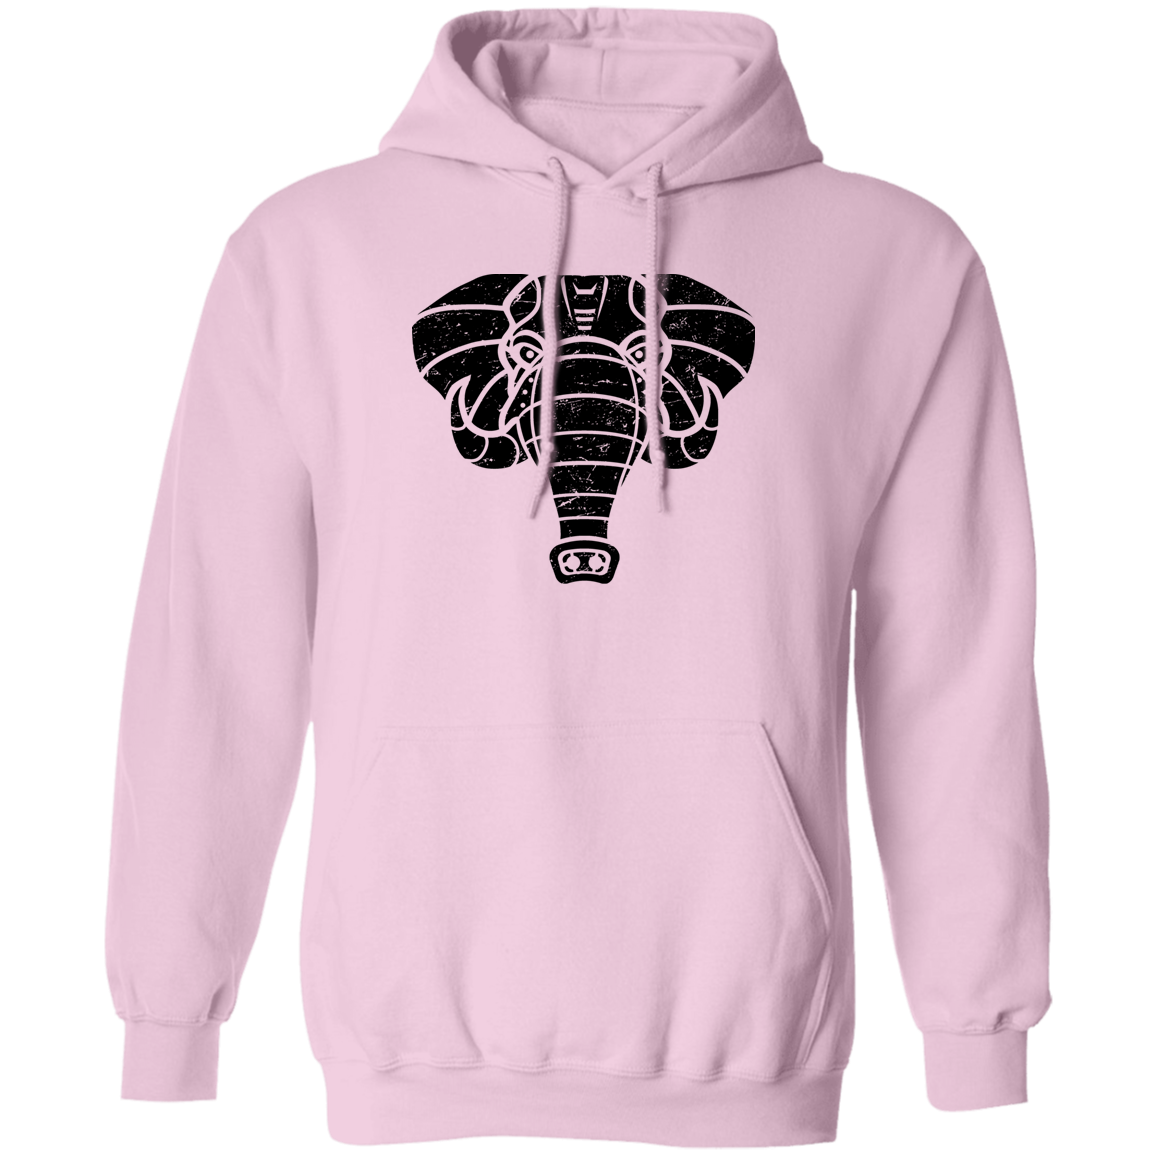 Black Distressed Emblem Hoodies for Adults (Elephant/Quake)